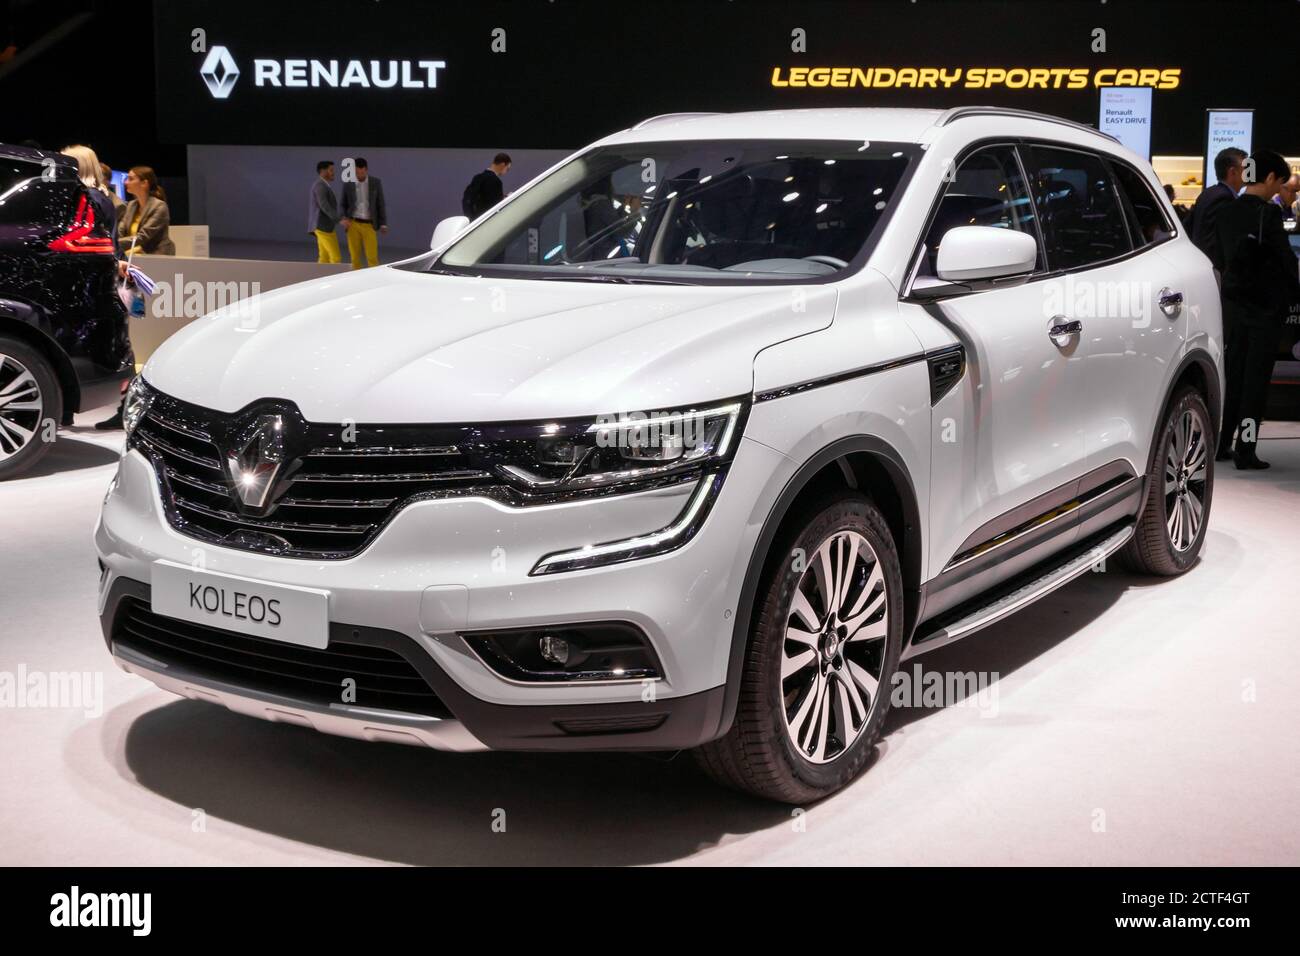 Renault Koleos car shown at the 89th Geneva International Motor Show. Geneva, Switzerland - March 5, 2019. Stock Photo